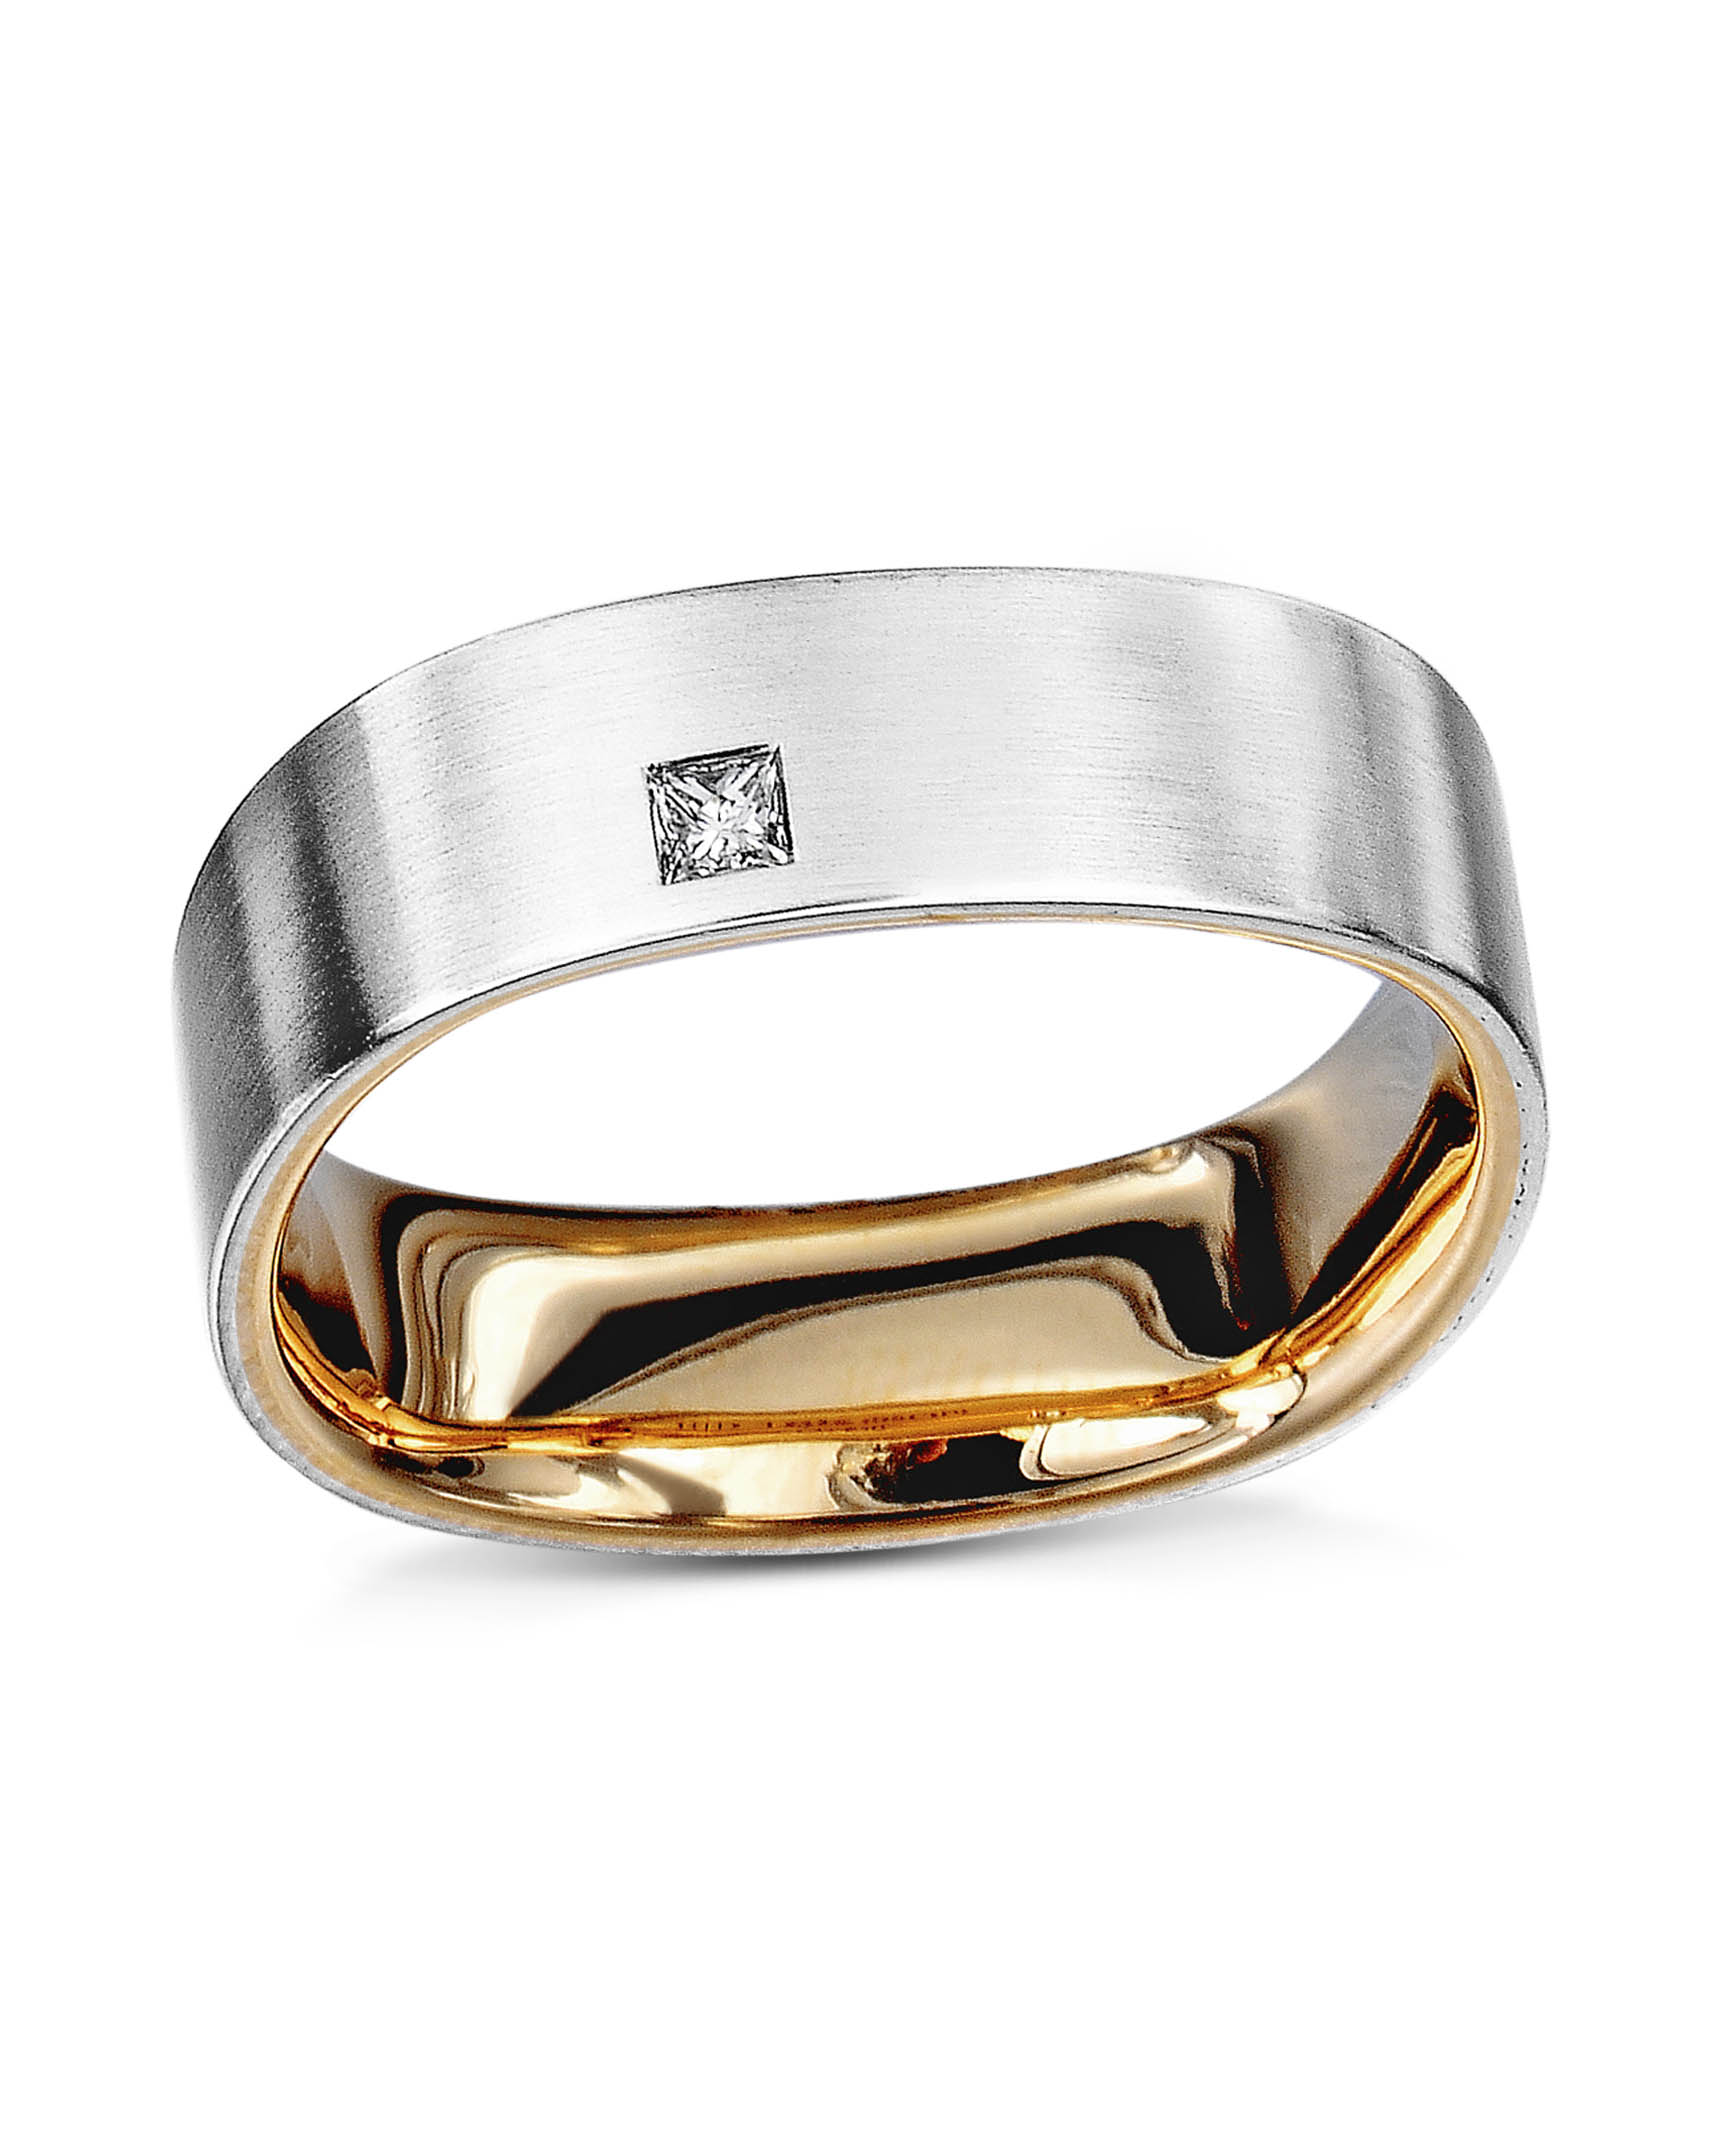 Buy Platinum & Rose Gold Couple Rings JL PT 999 Online in India - Etsy